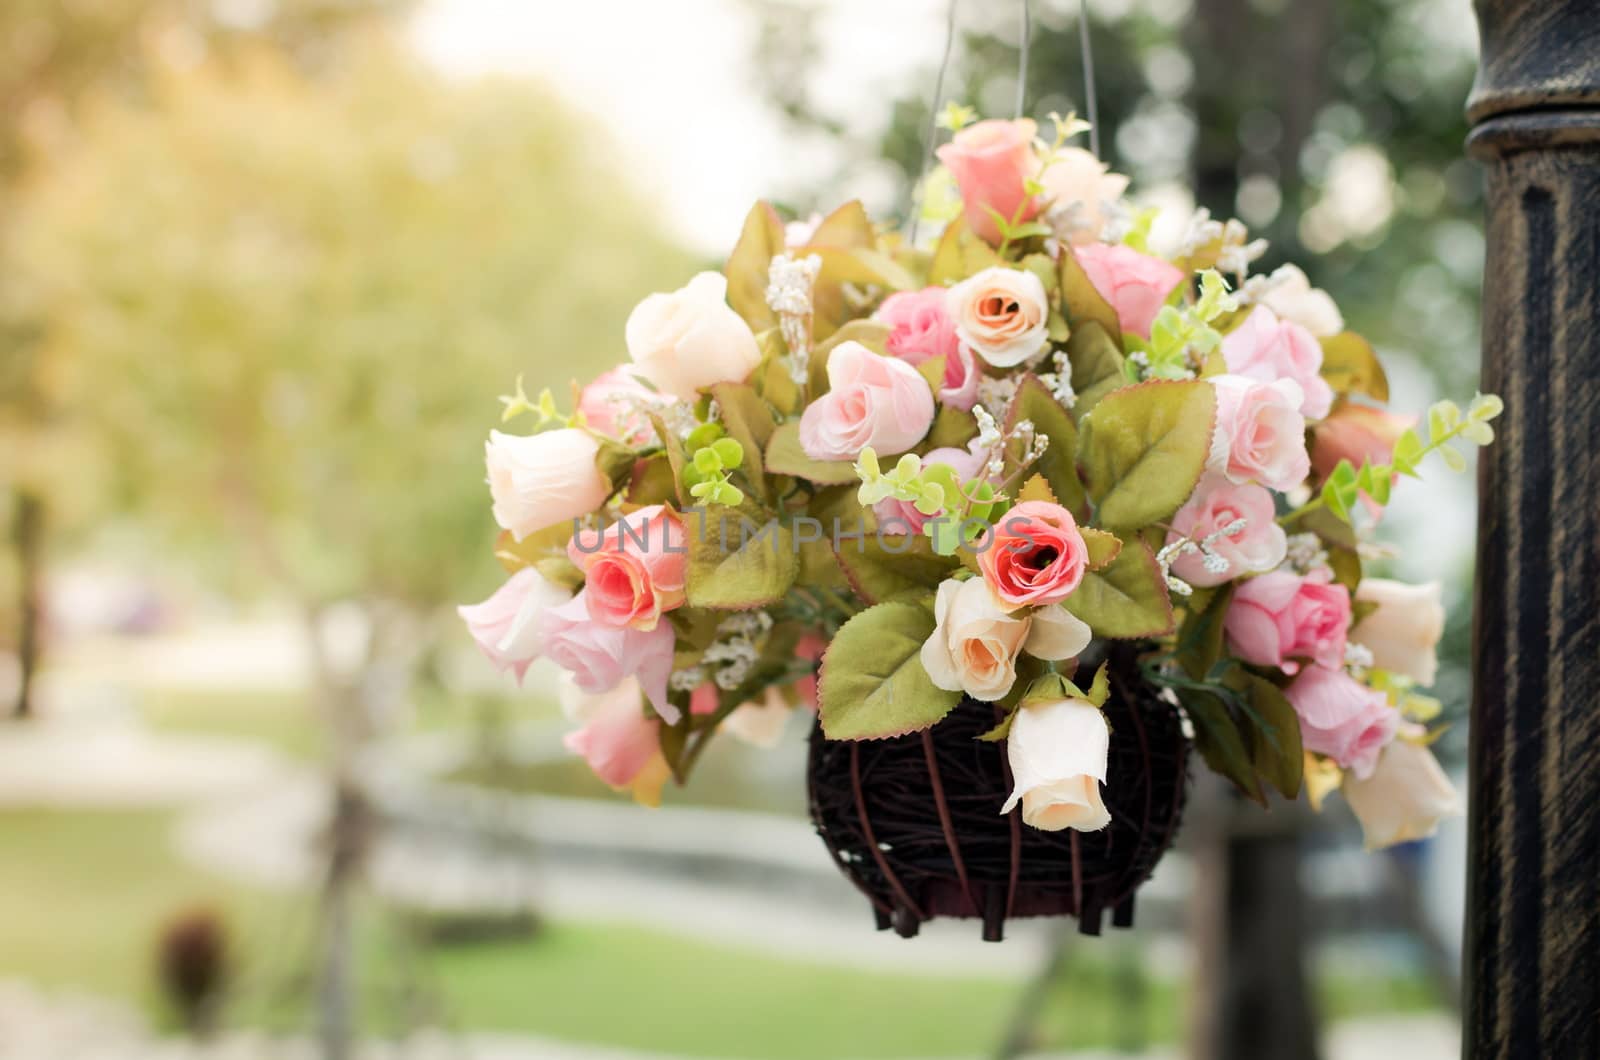 Hanging flower basket by nop16